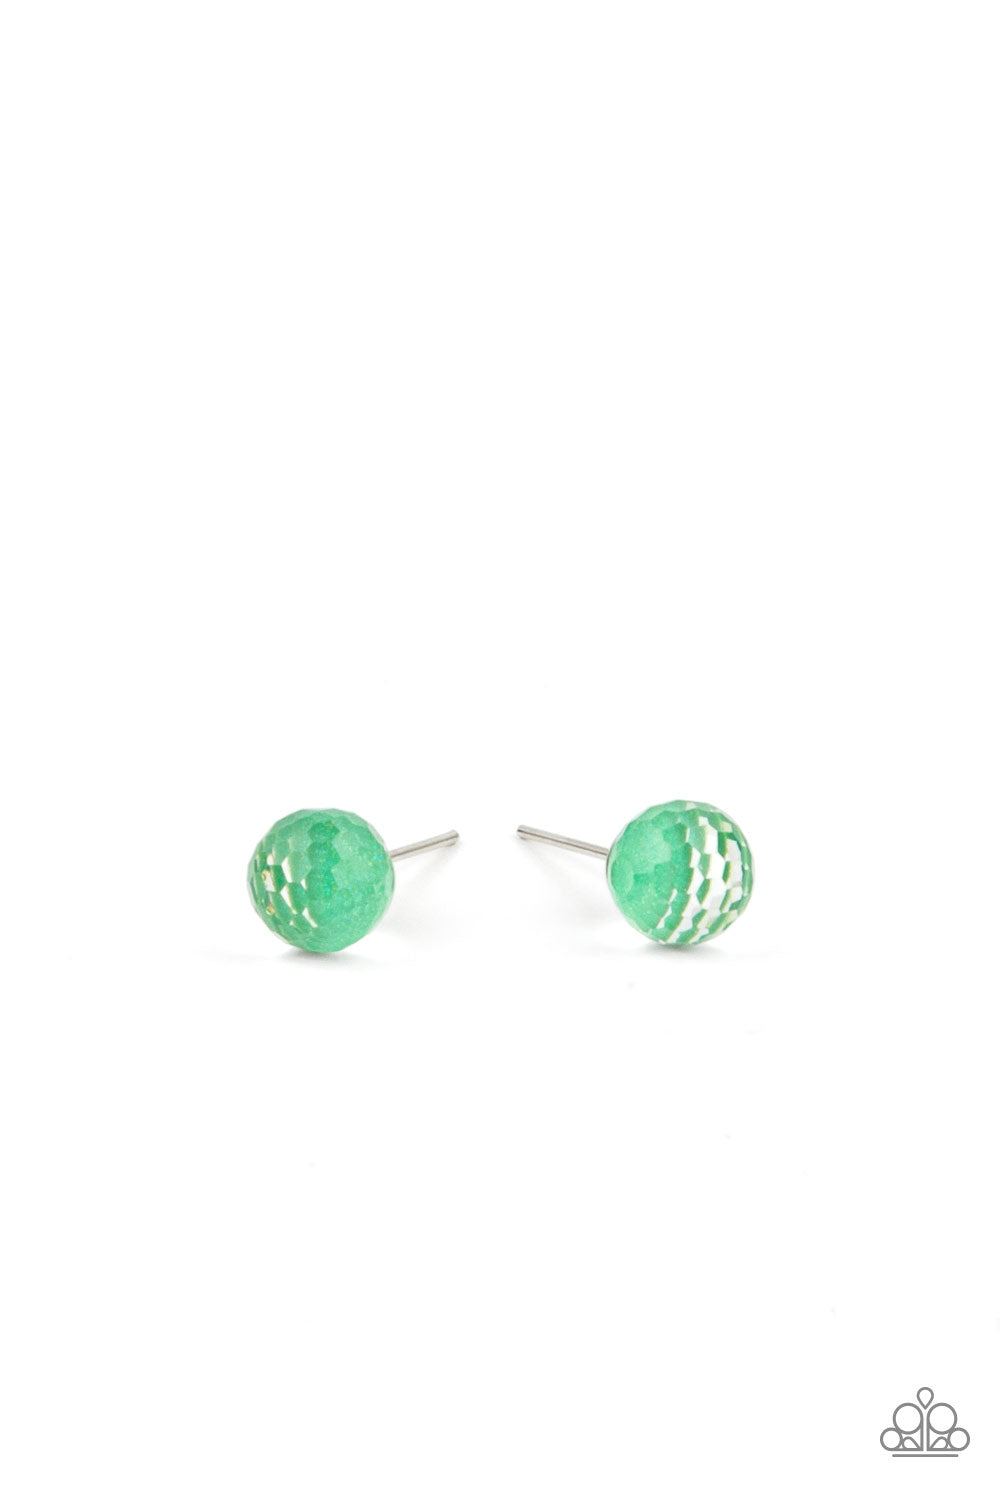 Starlet Shimmer Iridescent Faceted Bead Earrings ♥ Single Pair